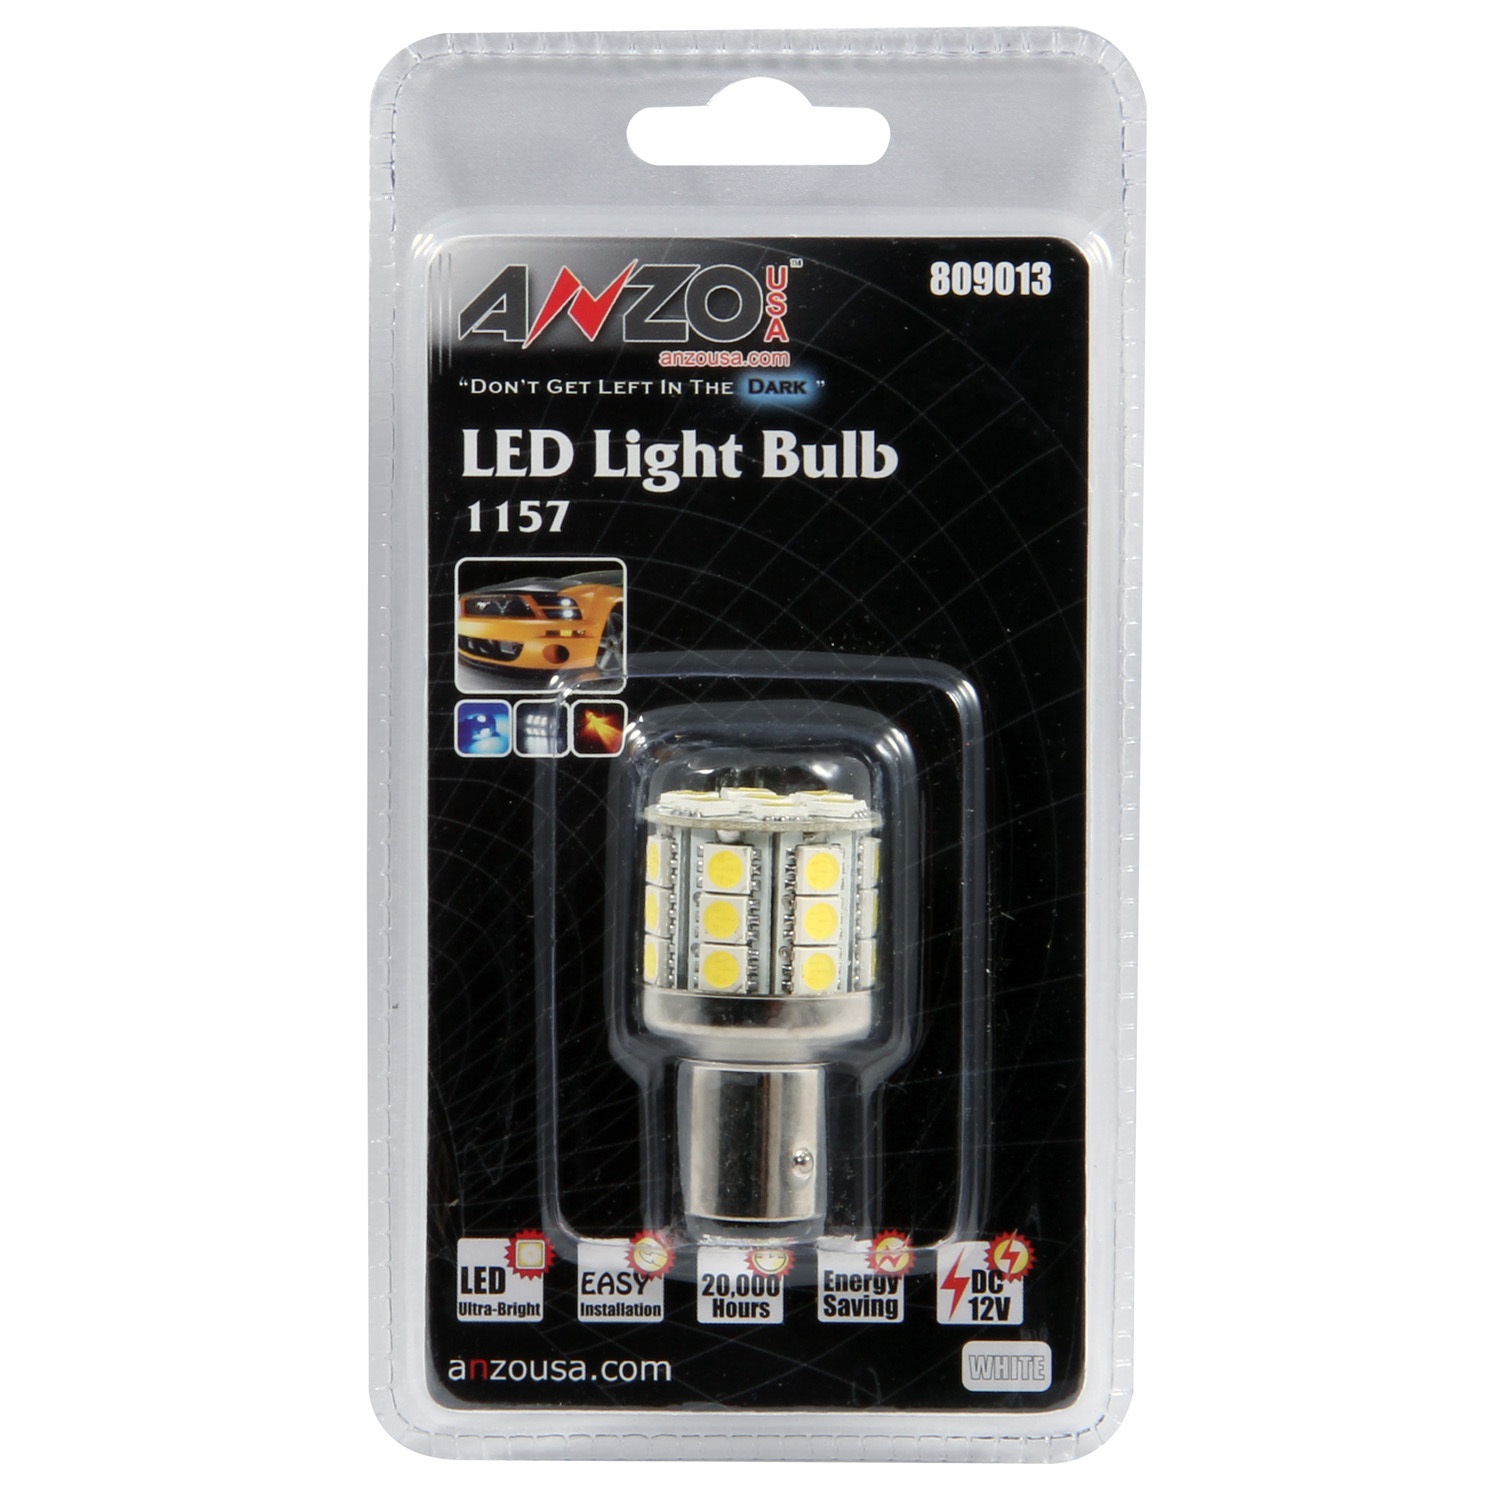 Anzo USA Anzo USA 809013 LED Replacement Bulb